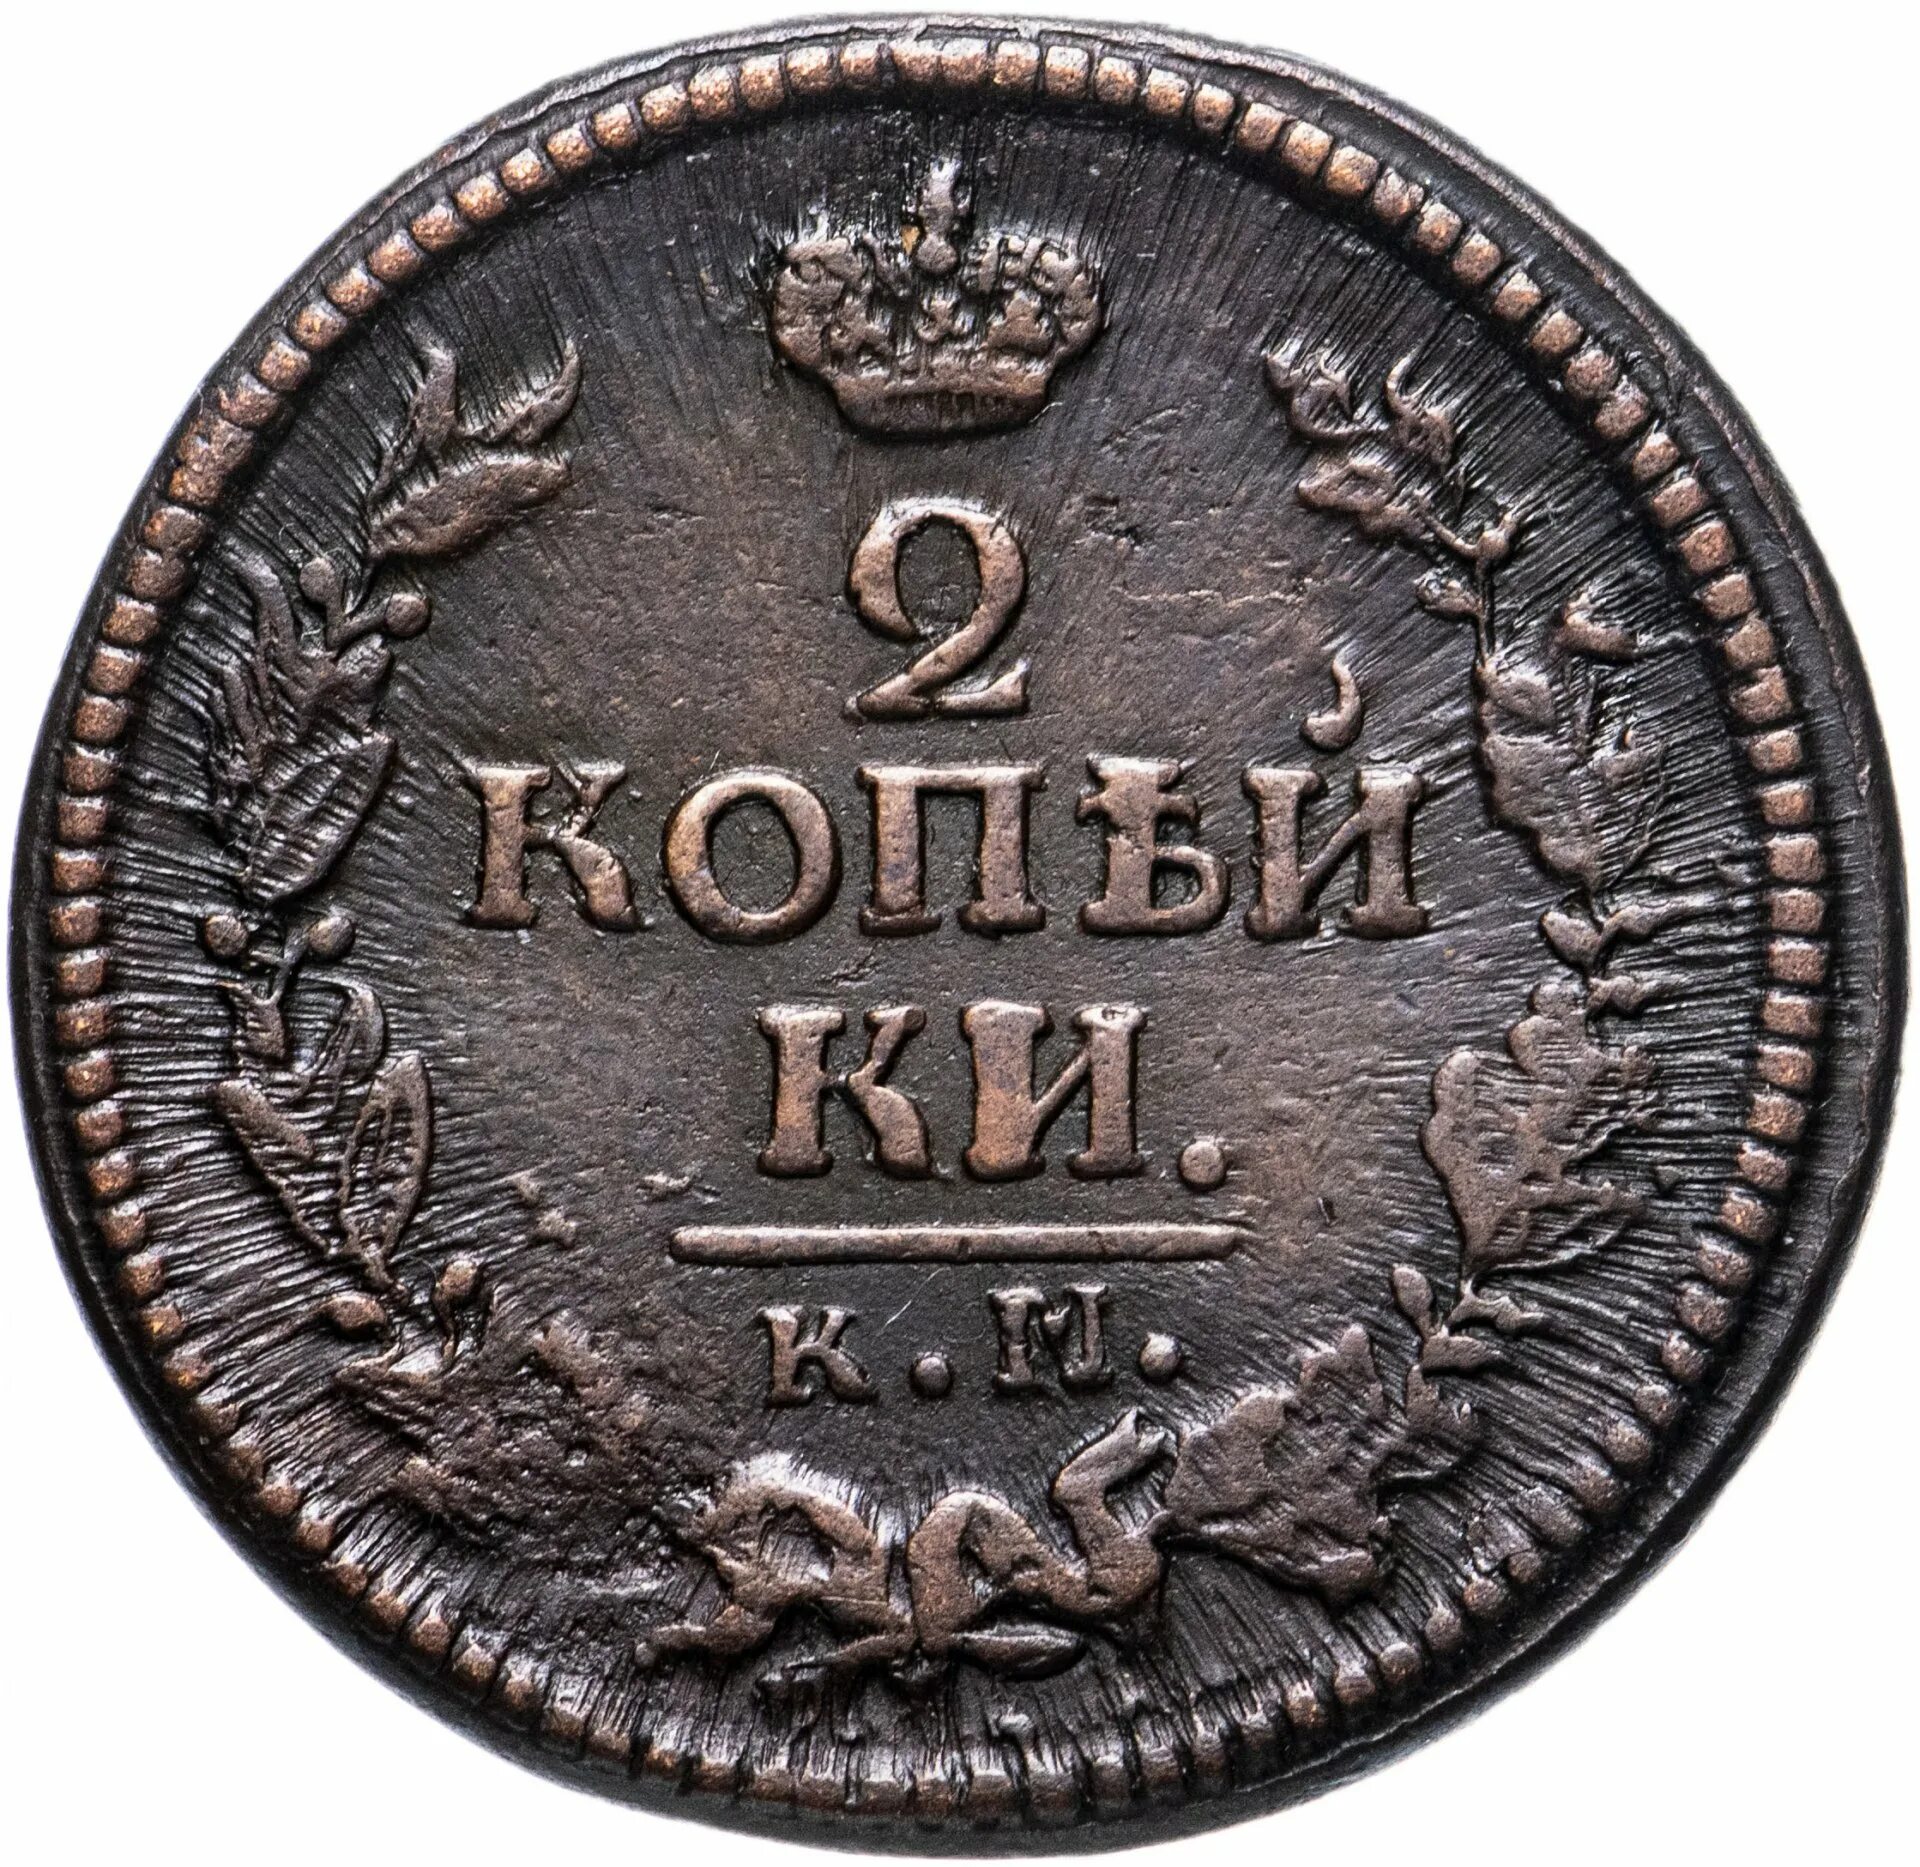 Two coins. Монета 2 копейки Николая 2. 2 Копейки 1918. Монета 2 копейки Романовы. Копейка Николая 2.